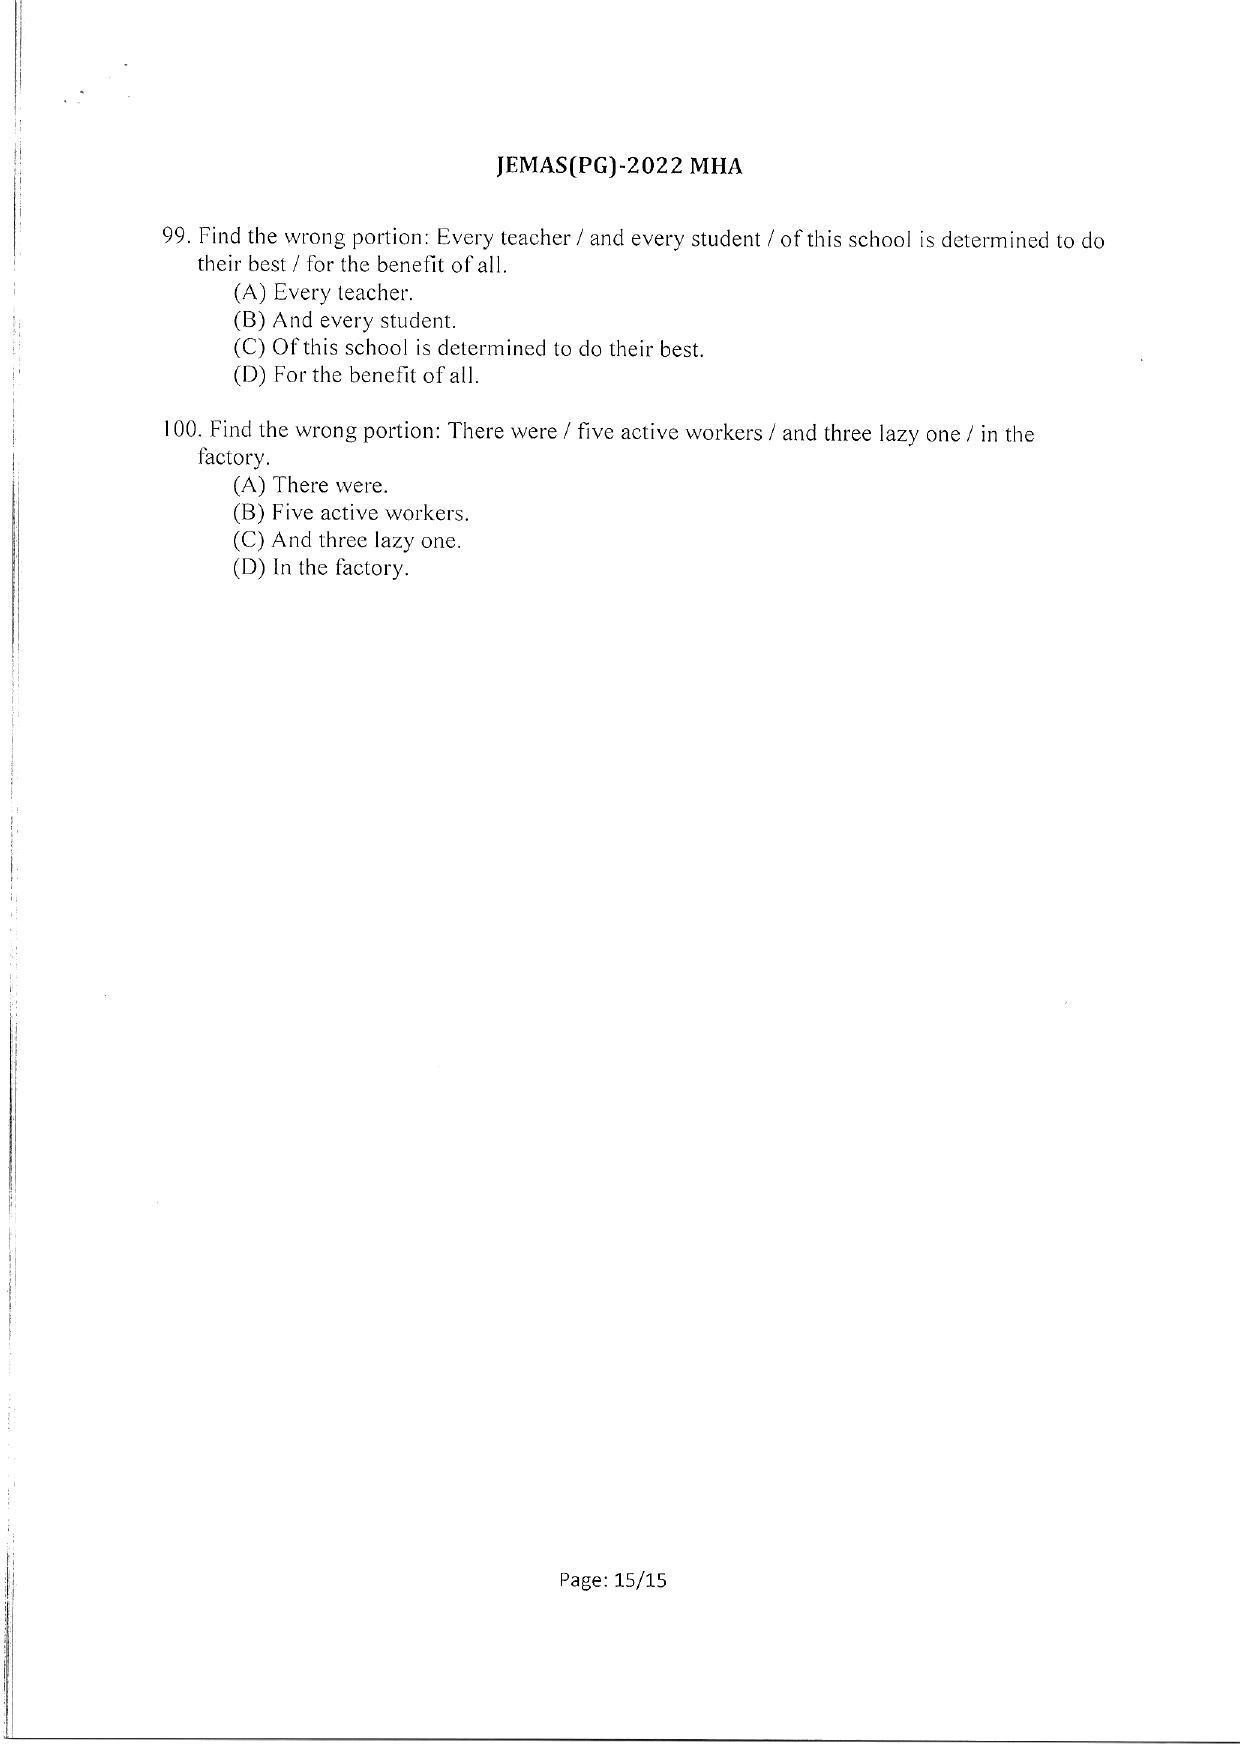 WBJEEB JEMAS (PG) 2022 MHA Question Paper - Page 17